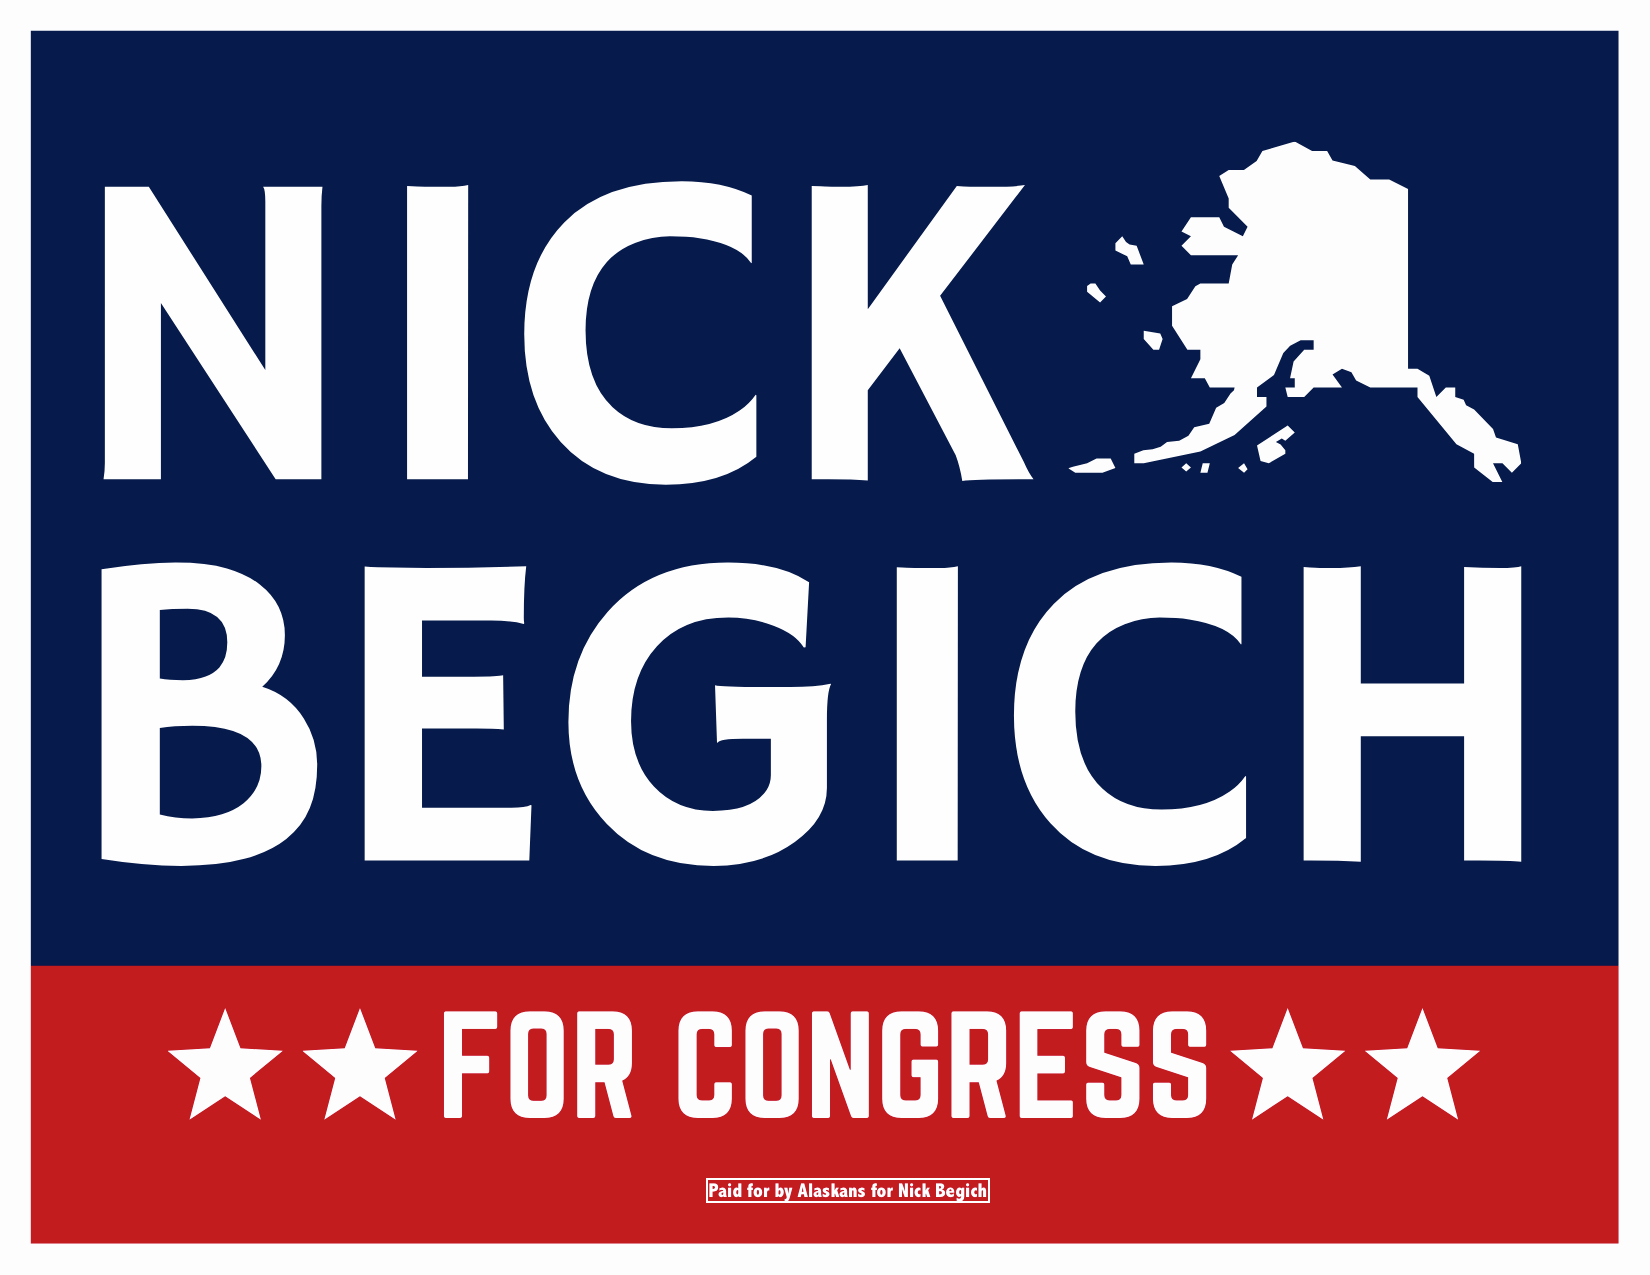 Nick begich poster